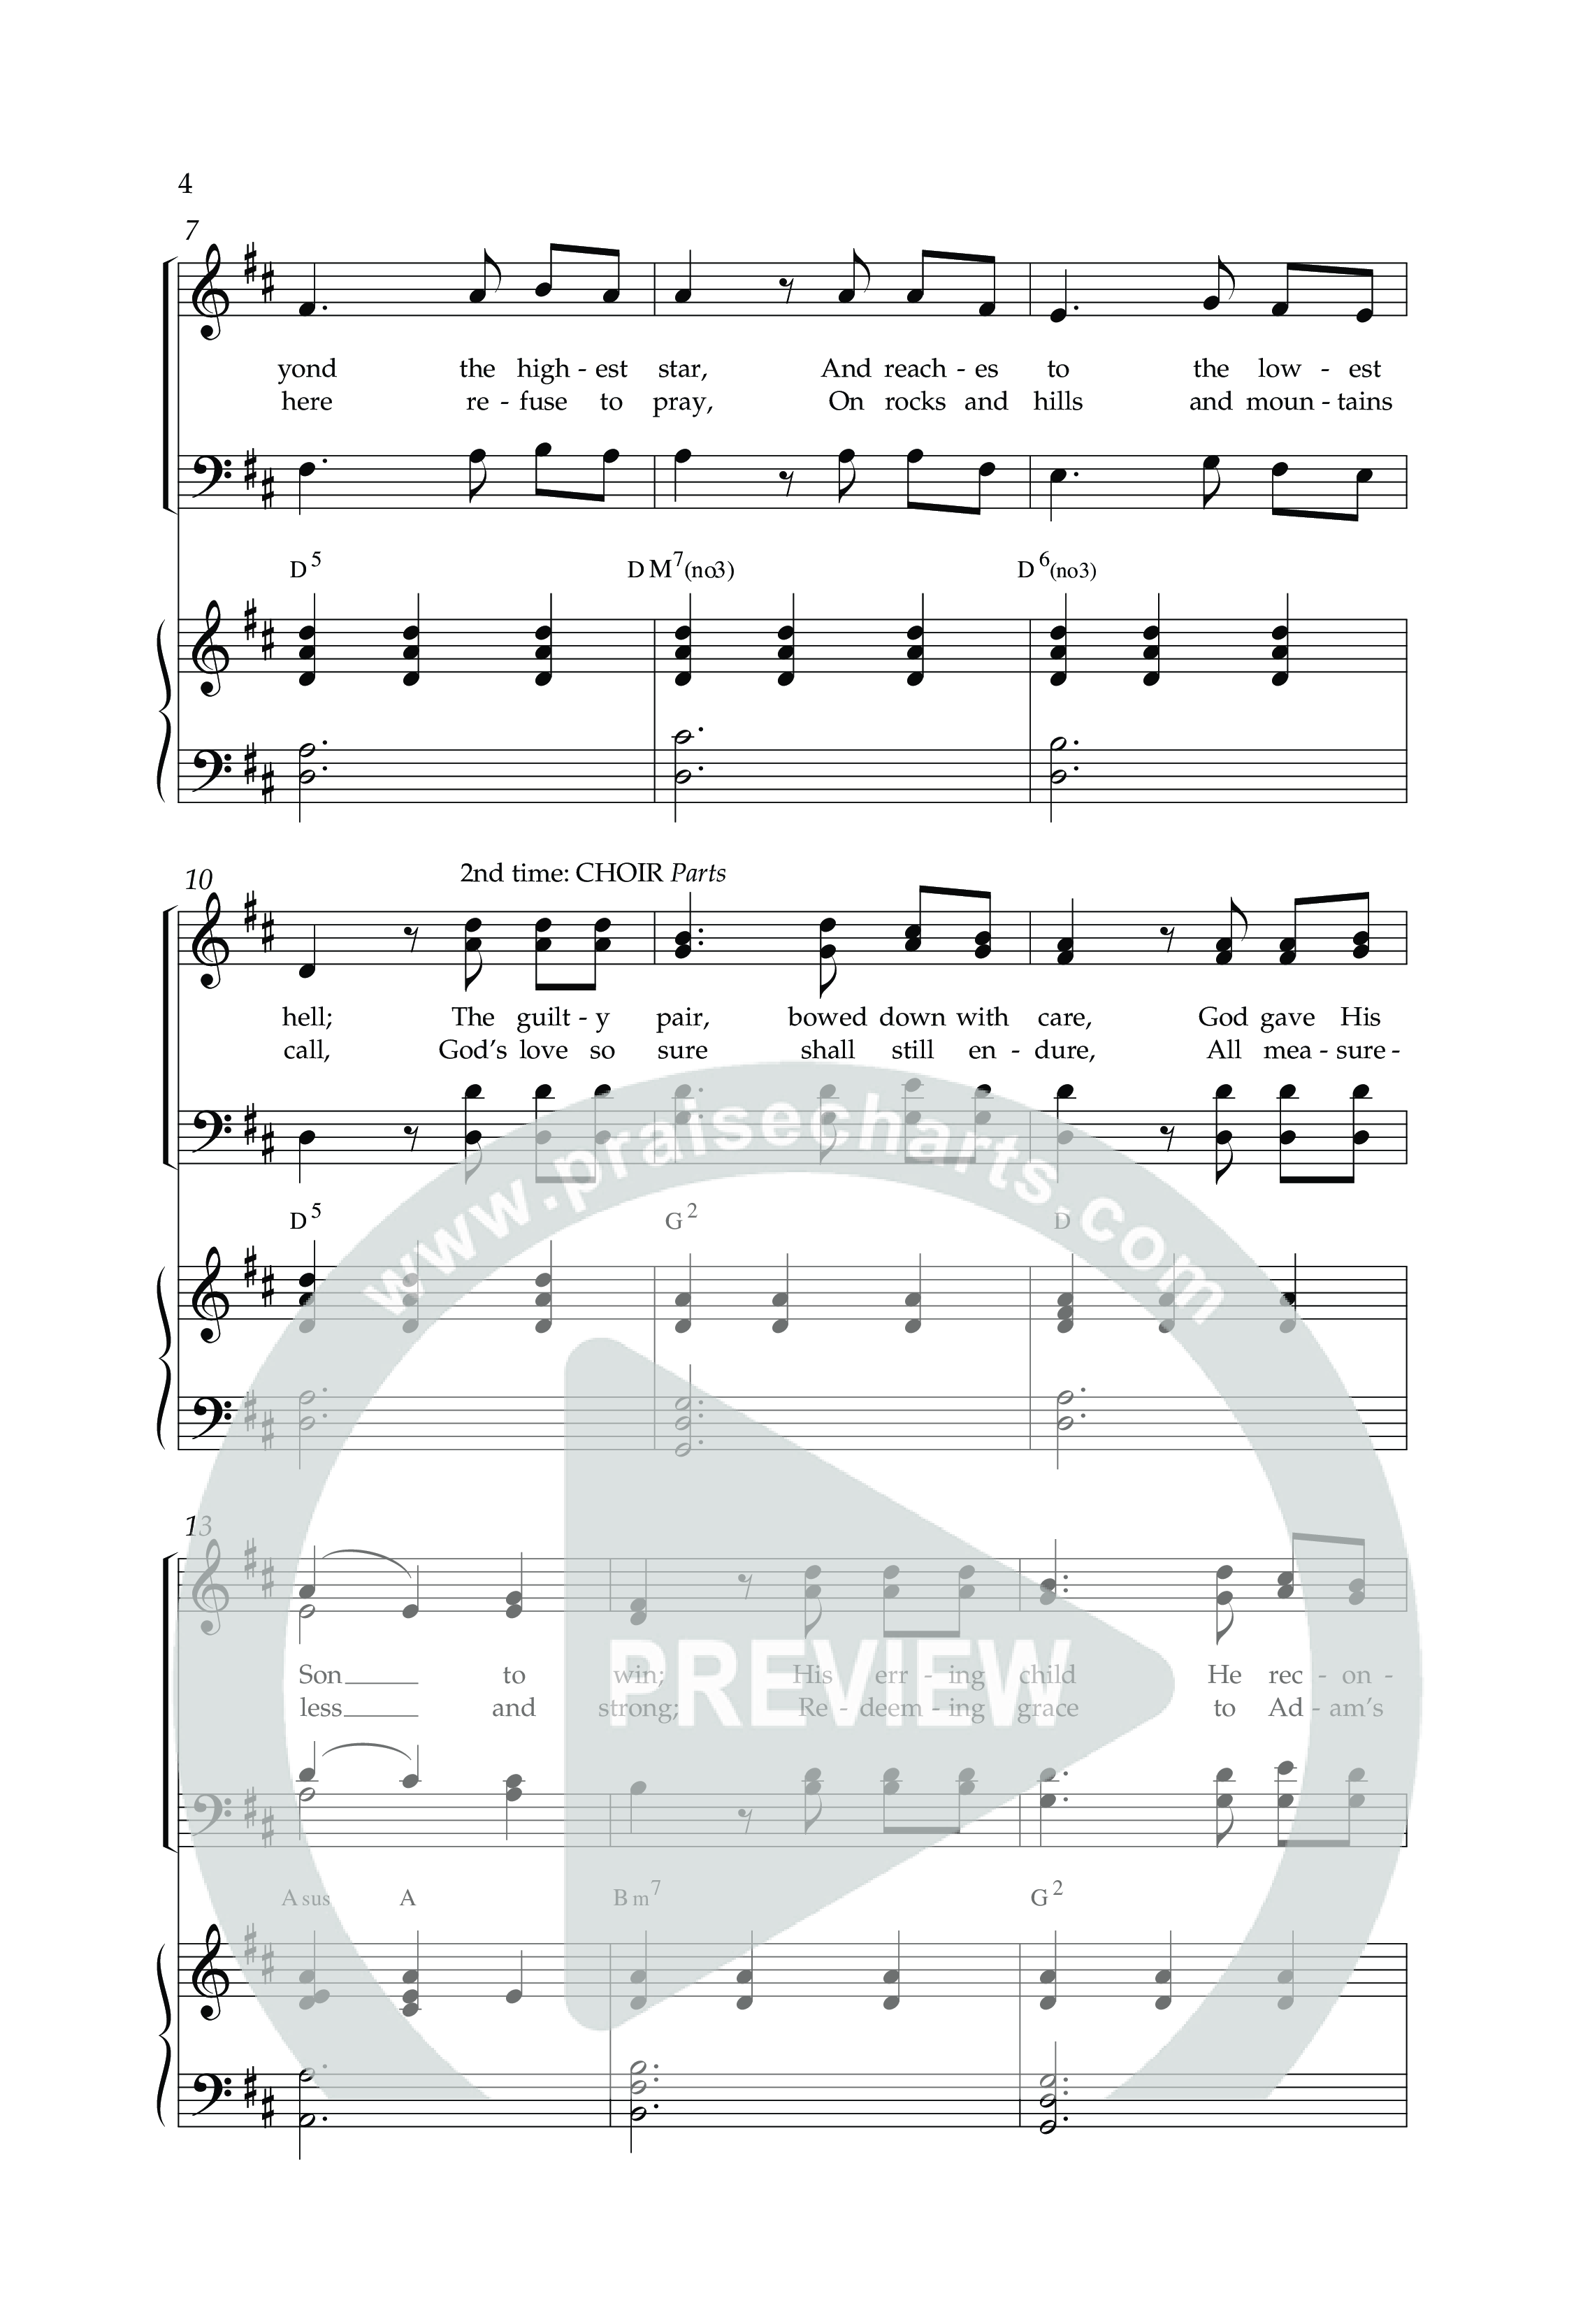 The Love of God (Choral Anthem SATB) Anthem (SATB/Piano) (Arr. Charlie Sinclair / Orch. Scott Harris / Lifeway Choral)